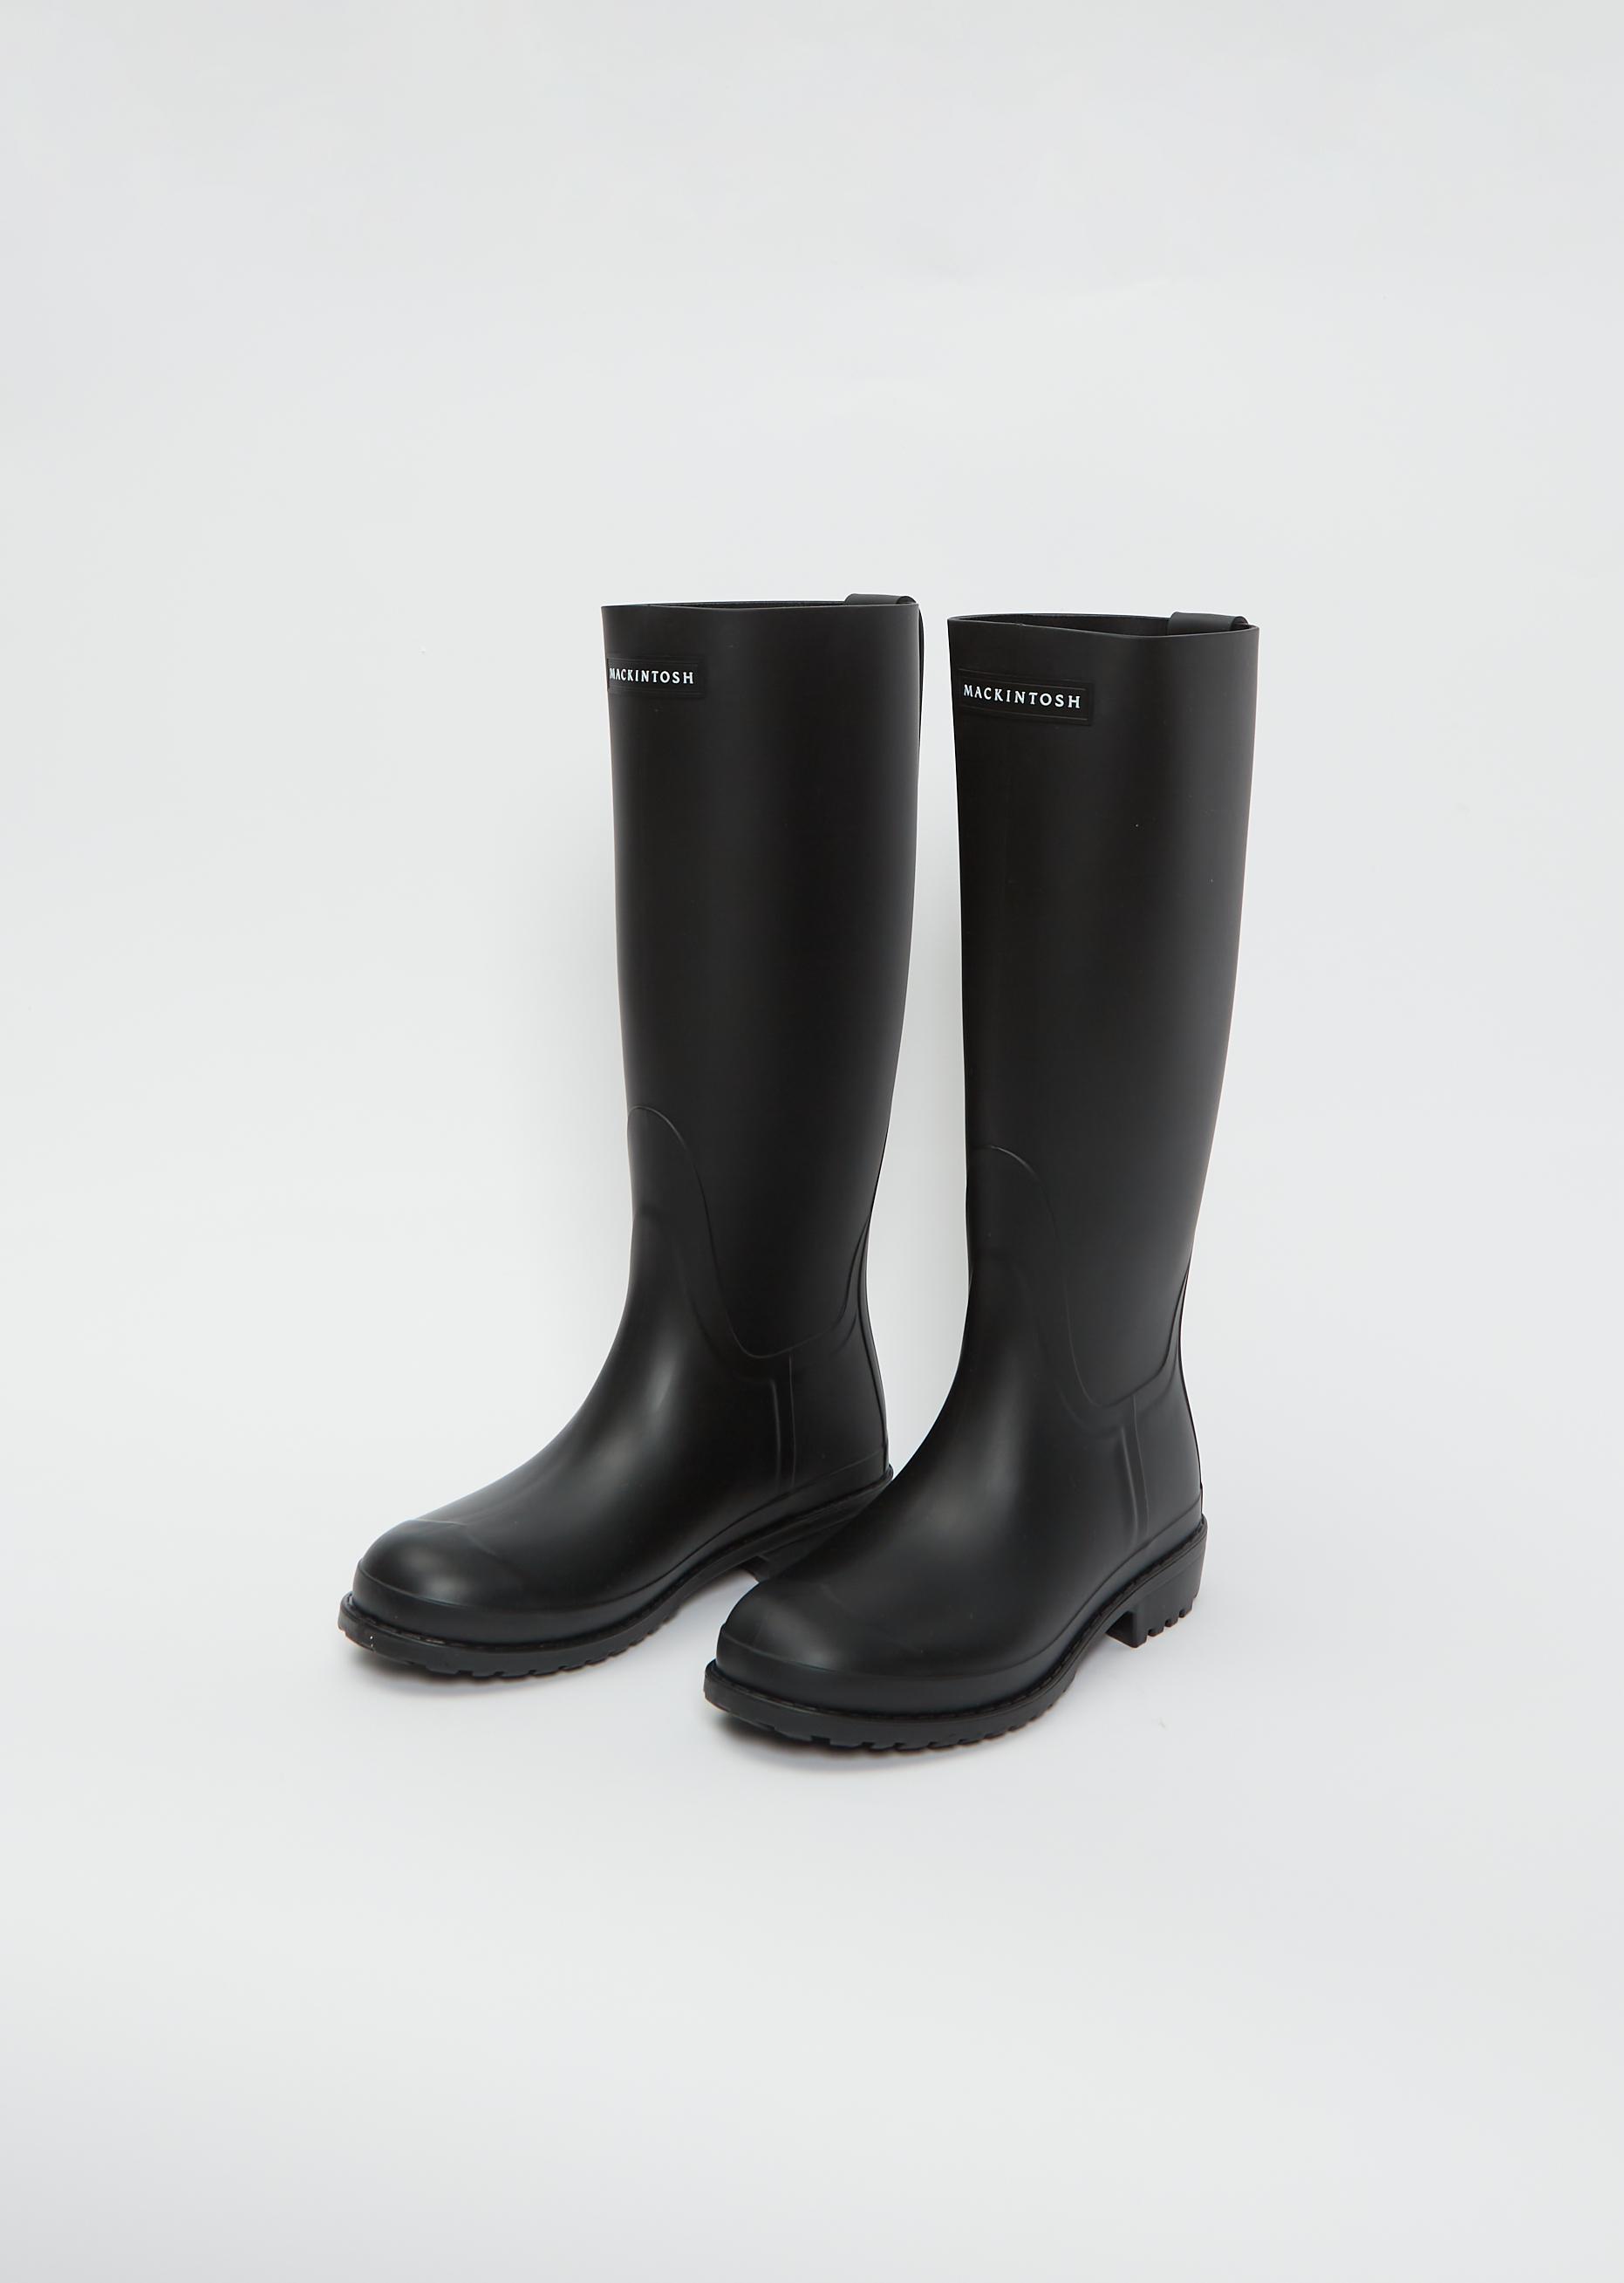 Mackintosh Wiston Boots in Black | Lyst